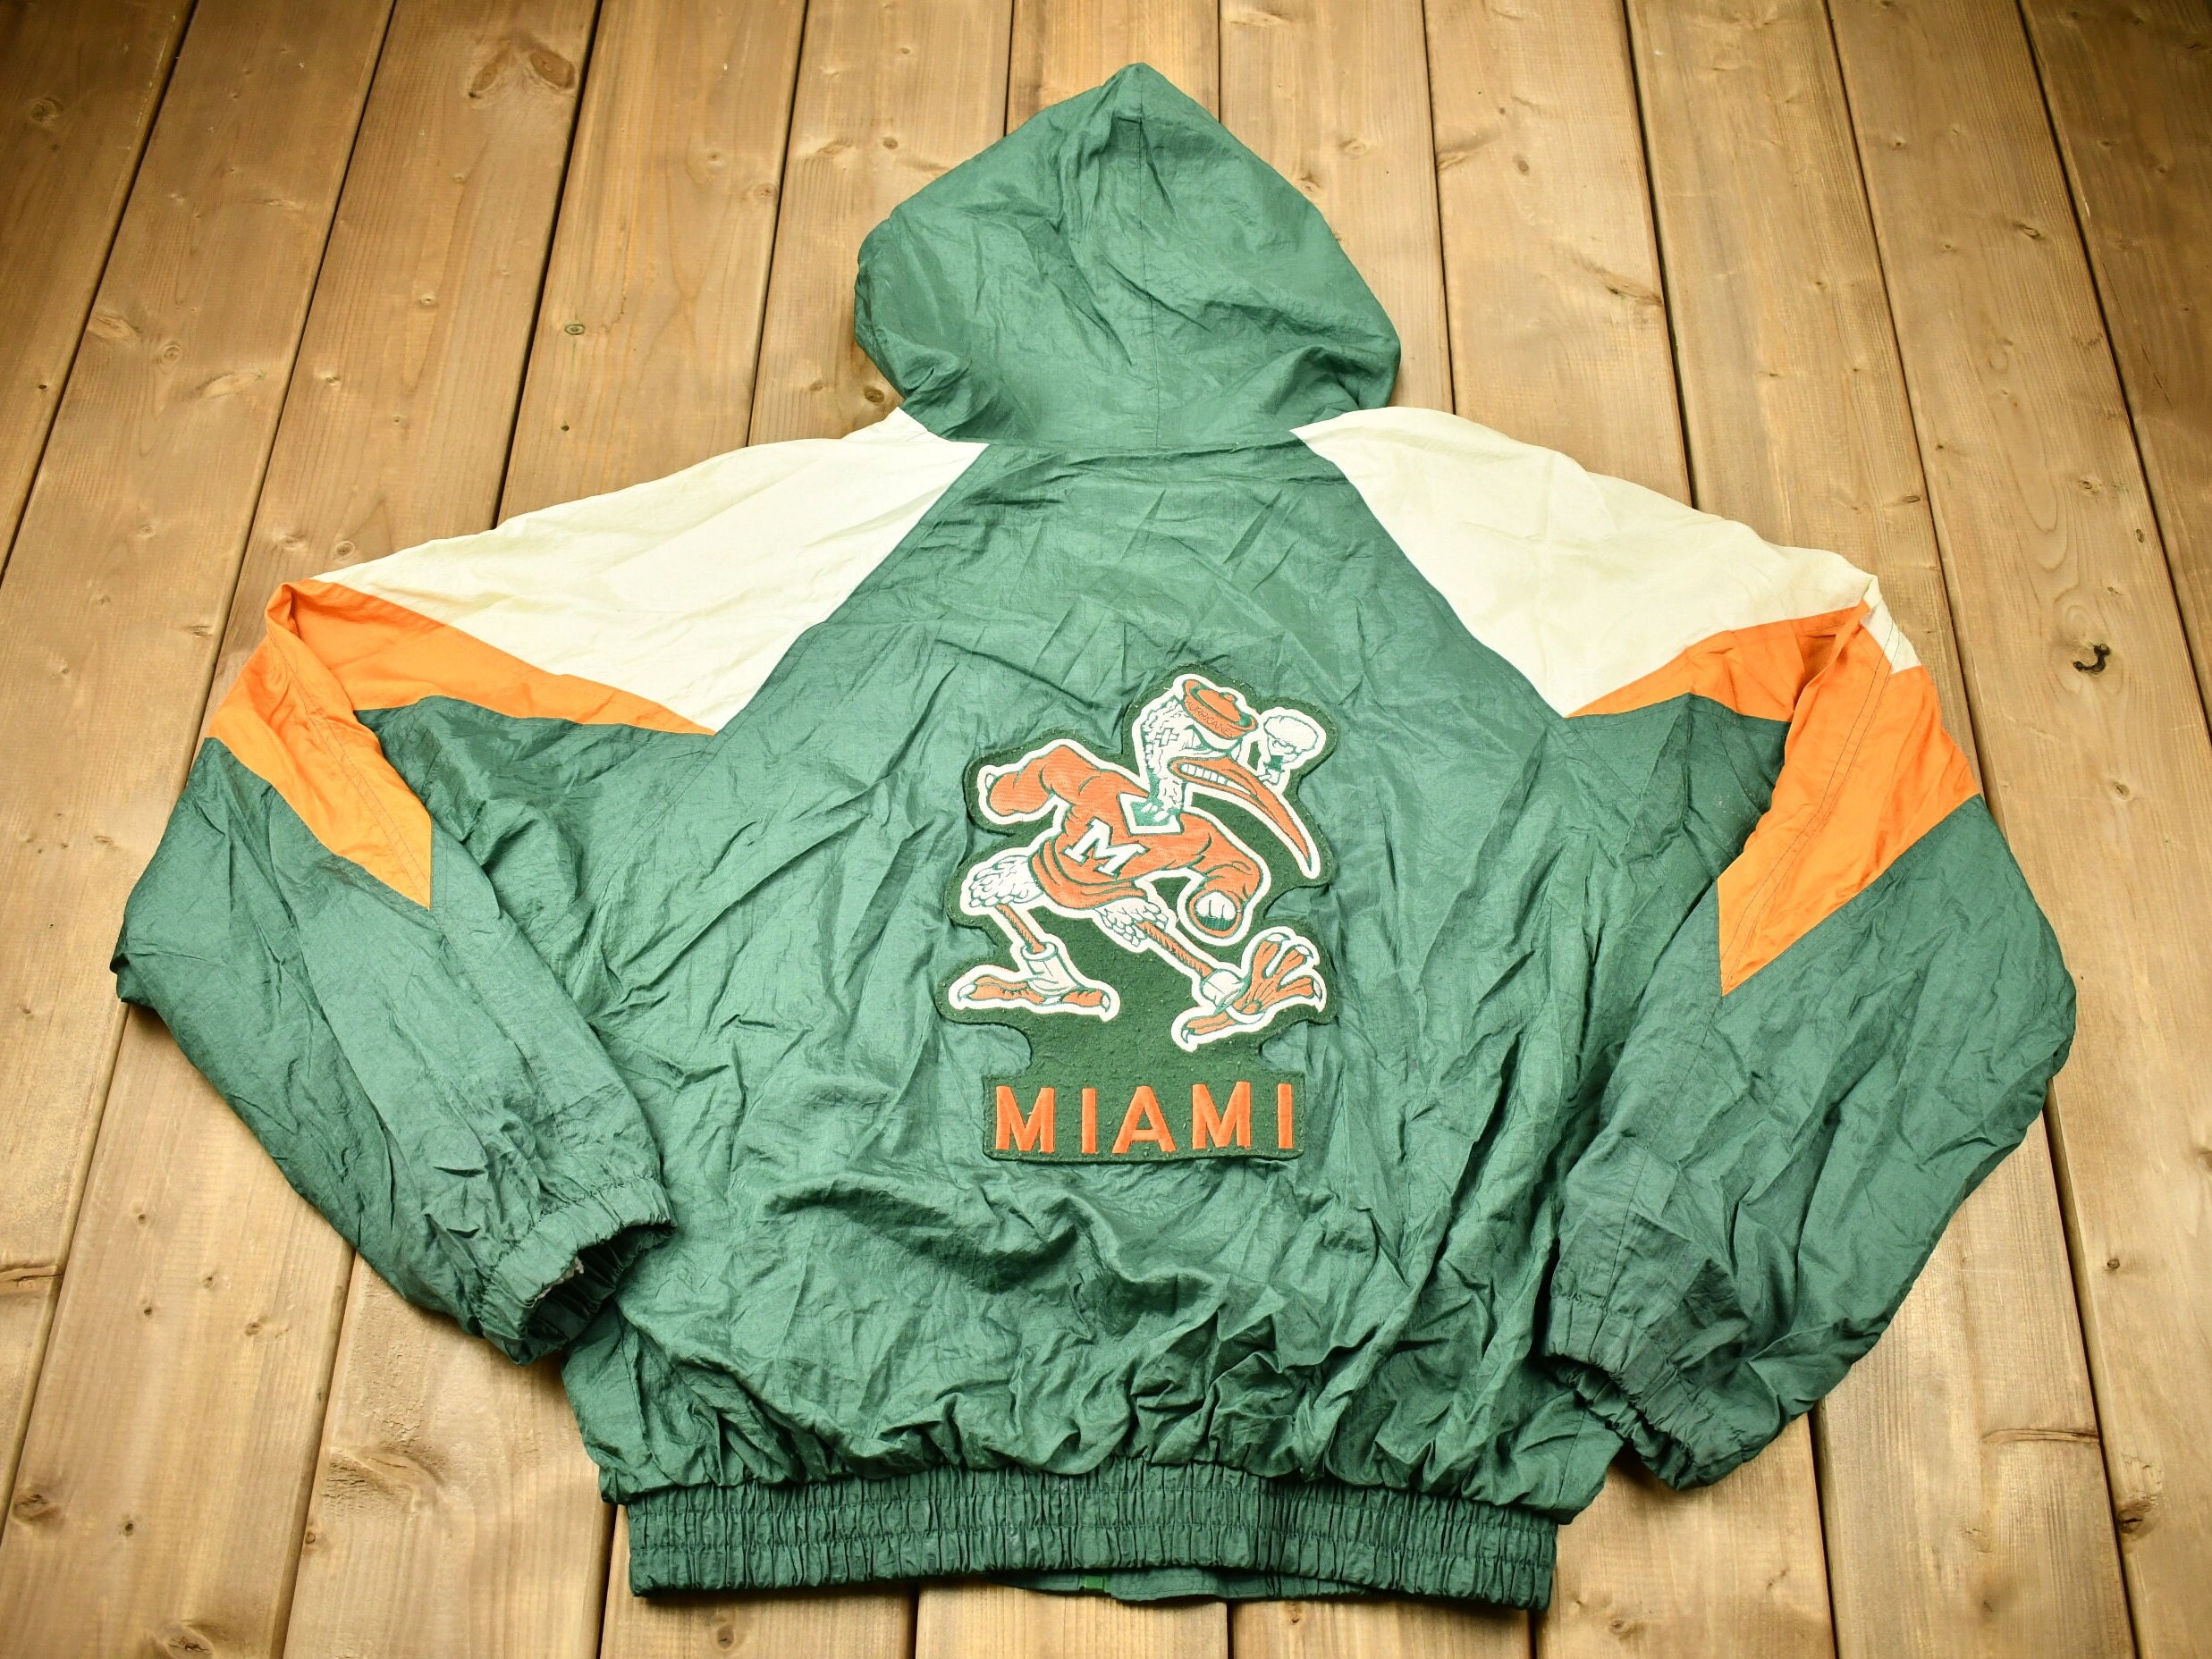 LegacyVintage99 Vintage University of Miami Hurricanes Hoodie Sweatshirt Starter Xtra Large XL 305 The U Miami Florida NCAA College Football 1990s 90s